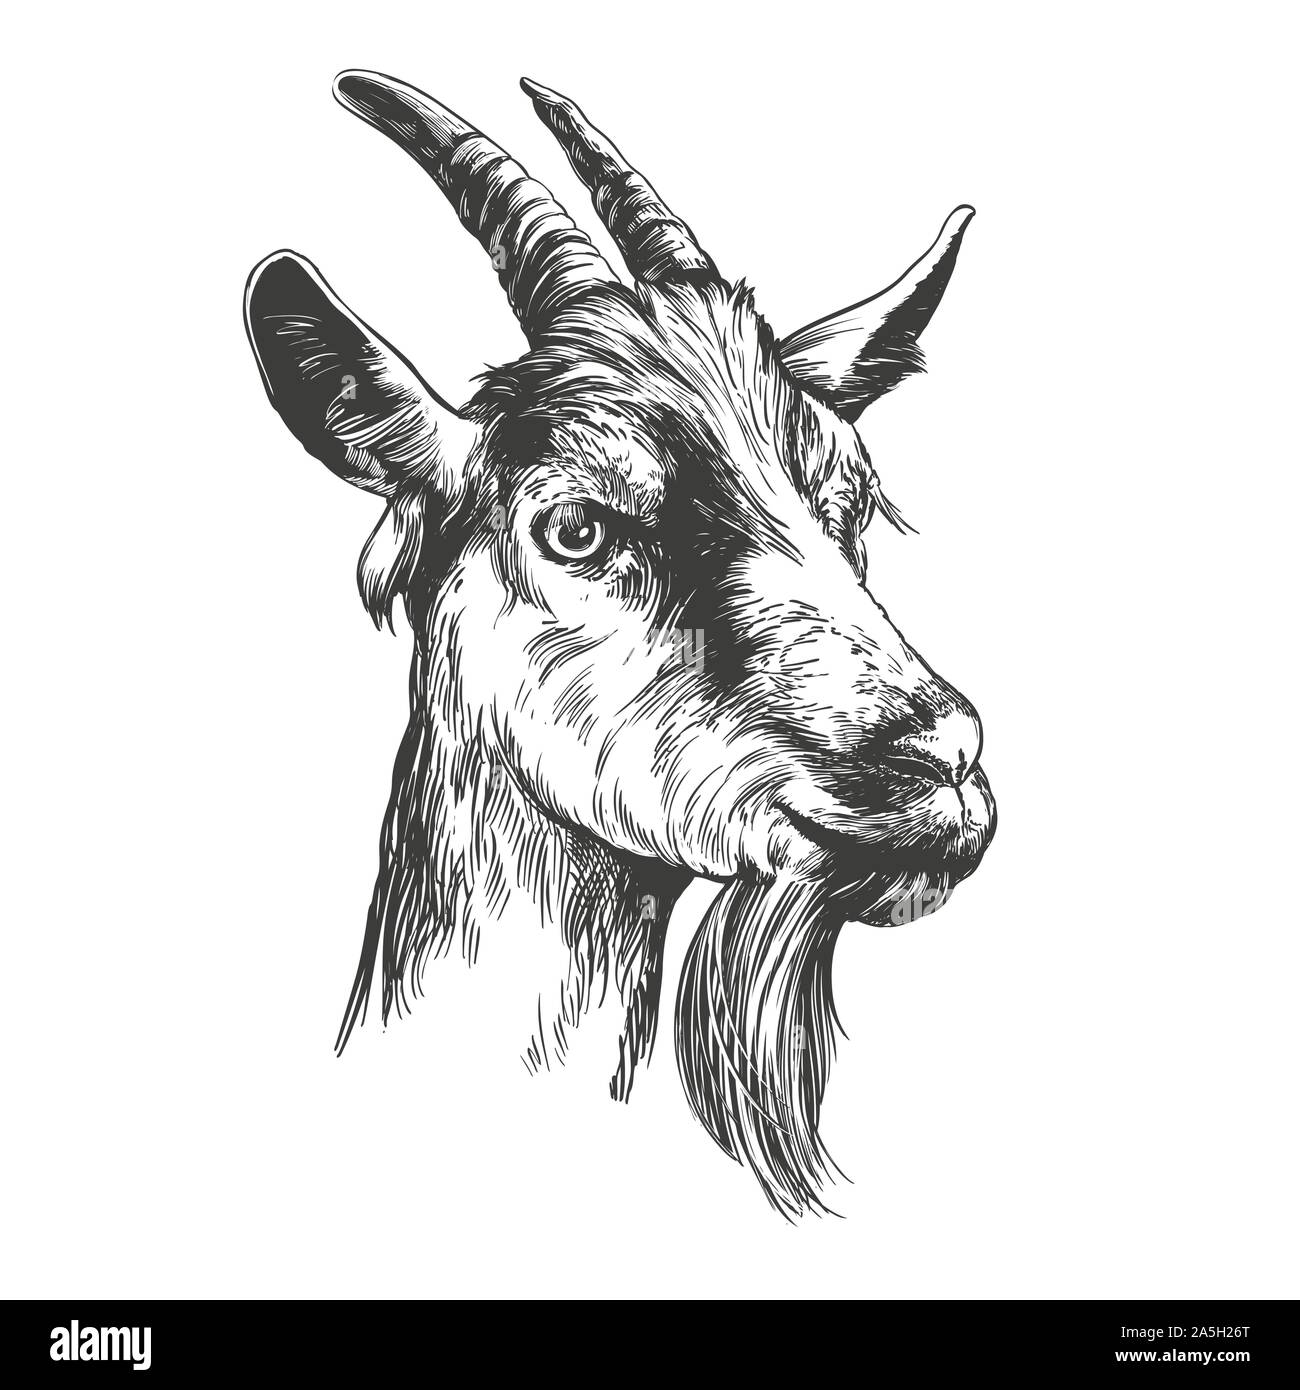 Drawings Of Cartoon Goats